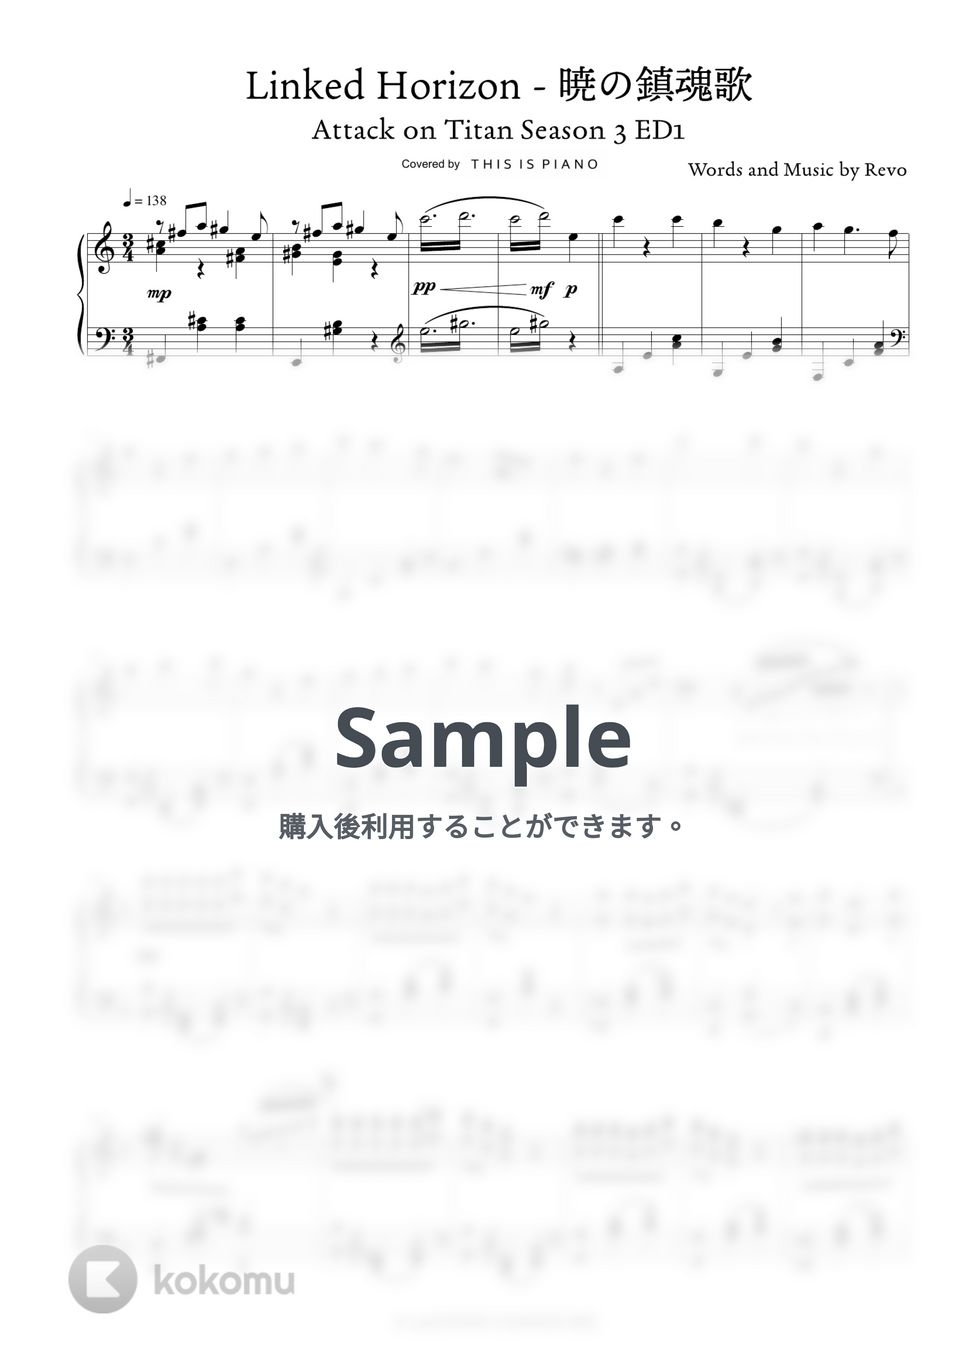 Linked Horizon - 暁の鎮魂歌 (進撃の巨人 Season 3 ED1) by THIS IS PIANO